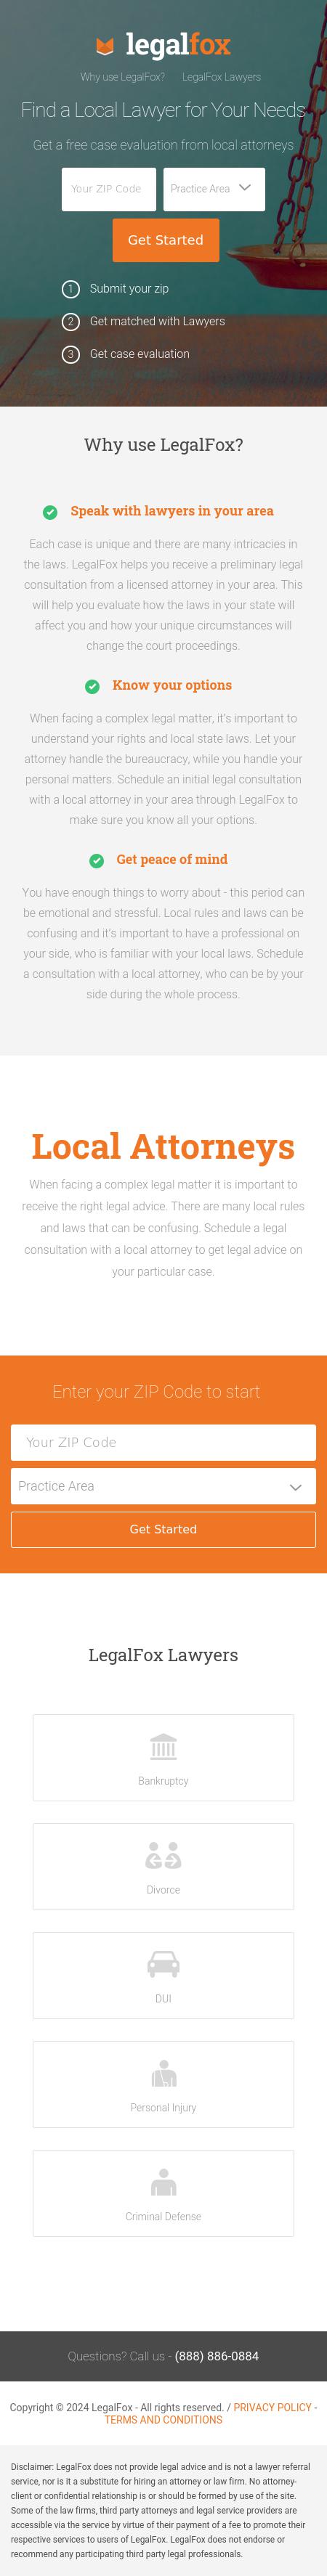 Find a Local Attorney - Dallas TX Lawyers